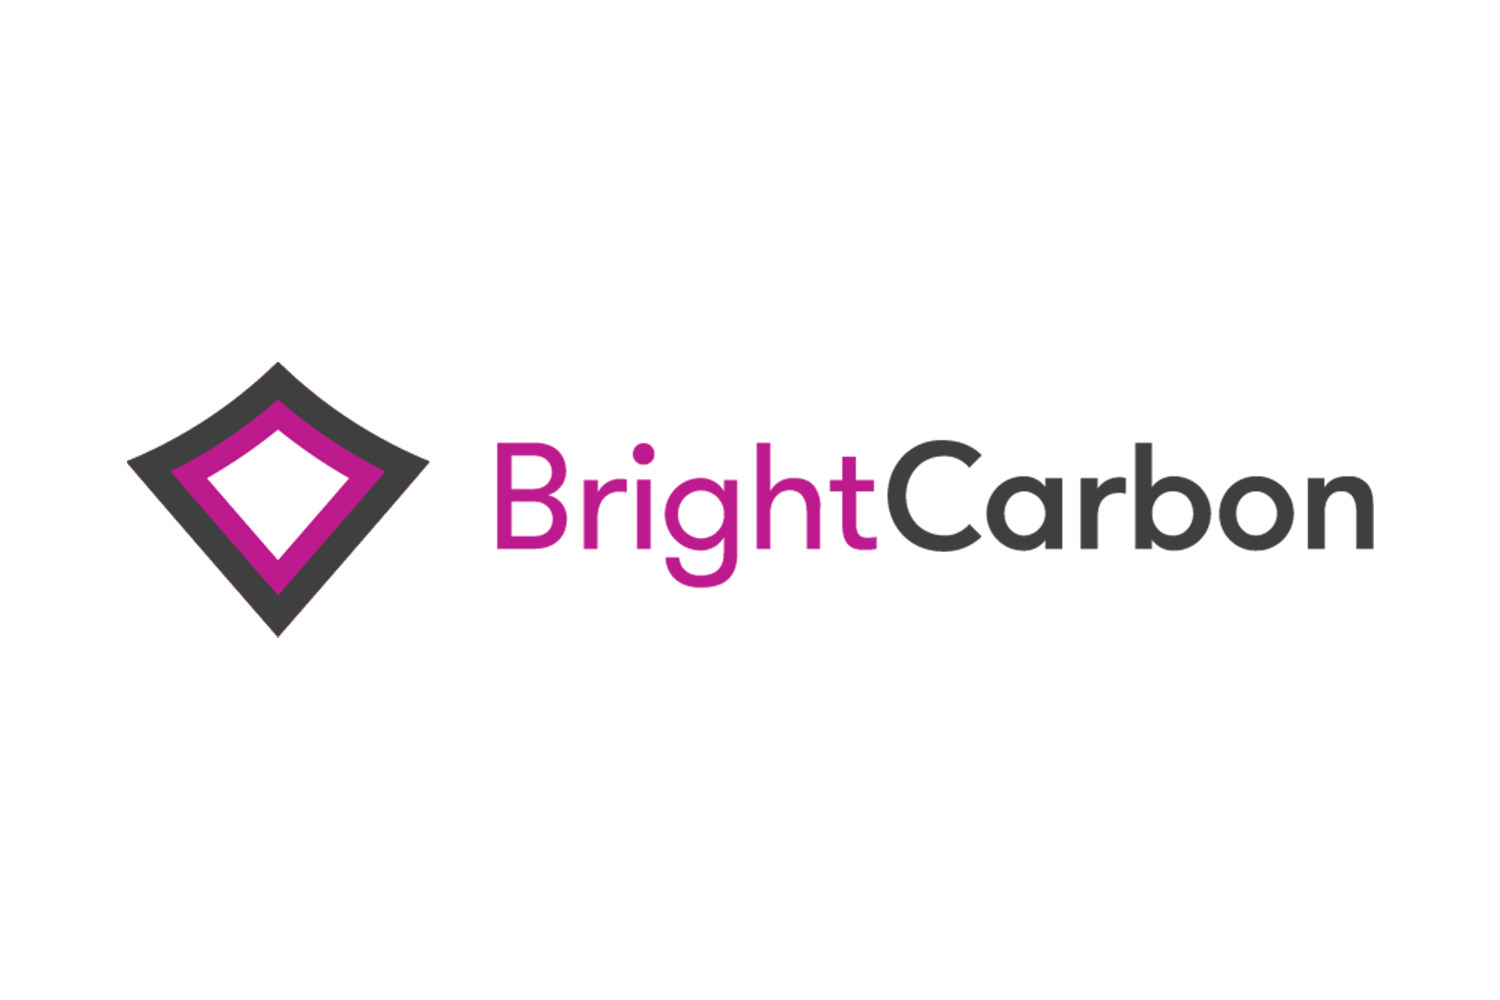 BrightCarbon